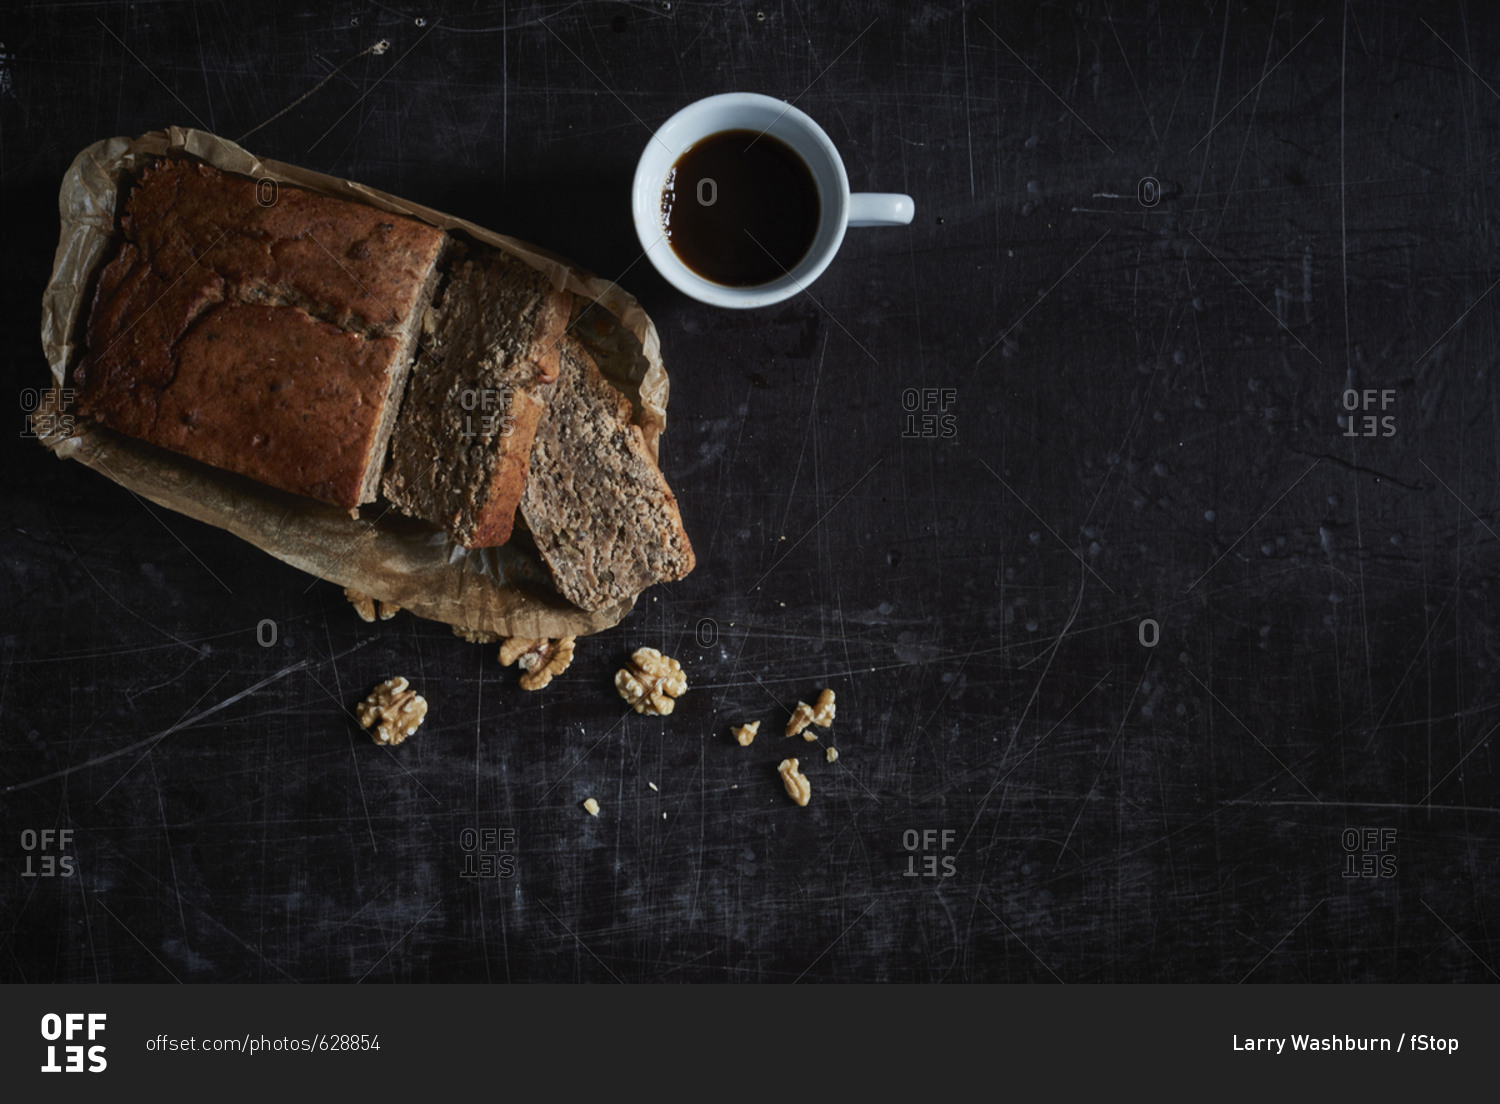 Directly above shot of walnut cake with coffee mug on granite